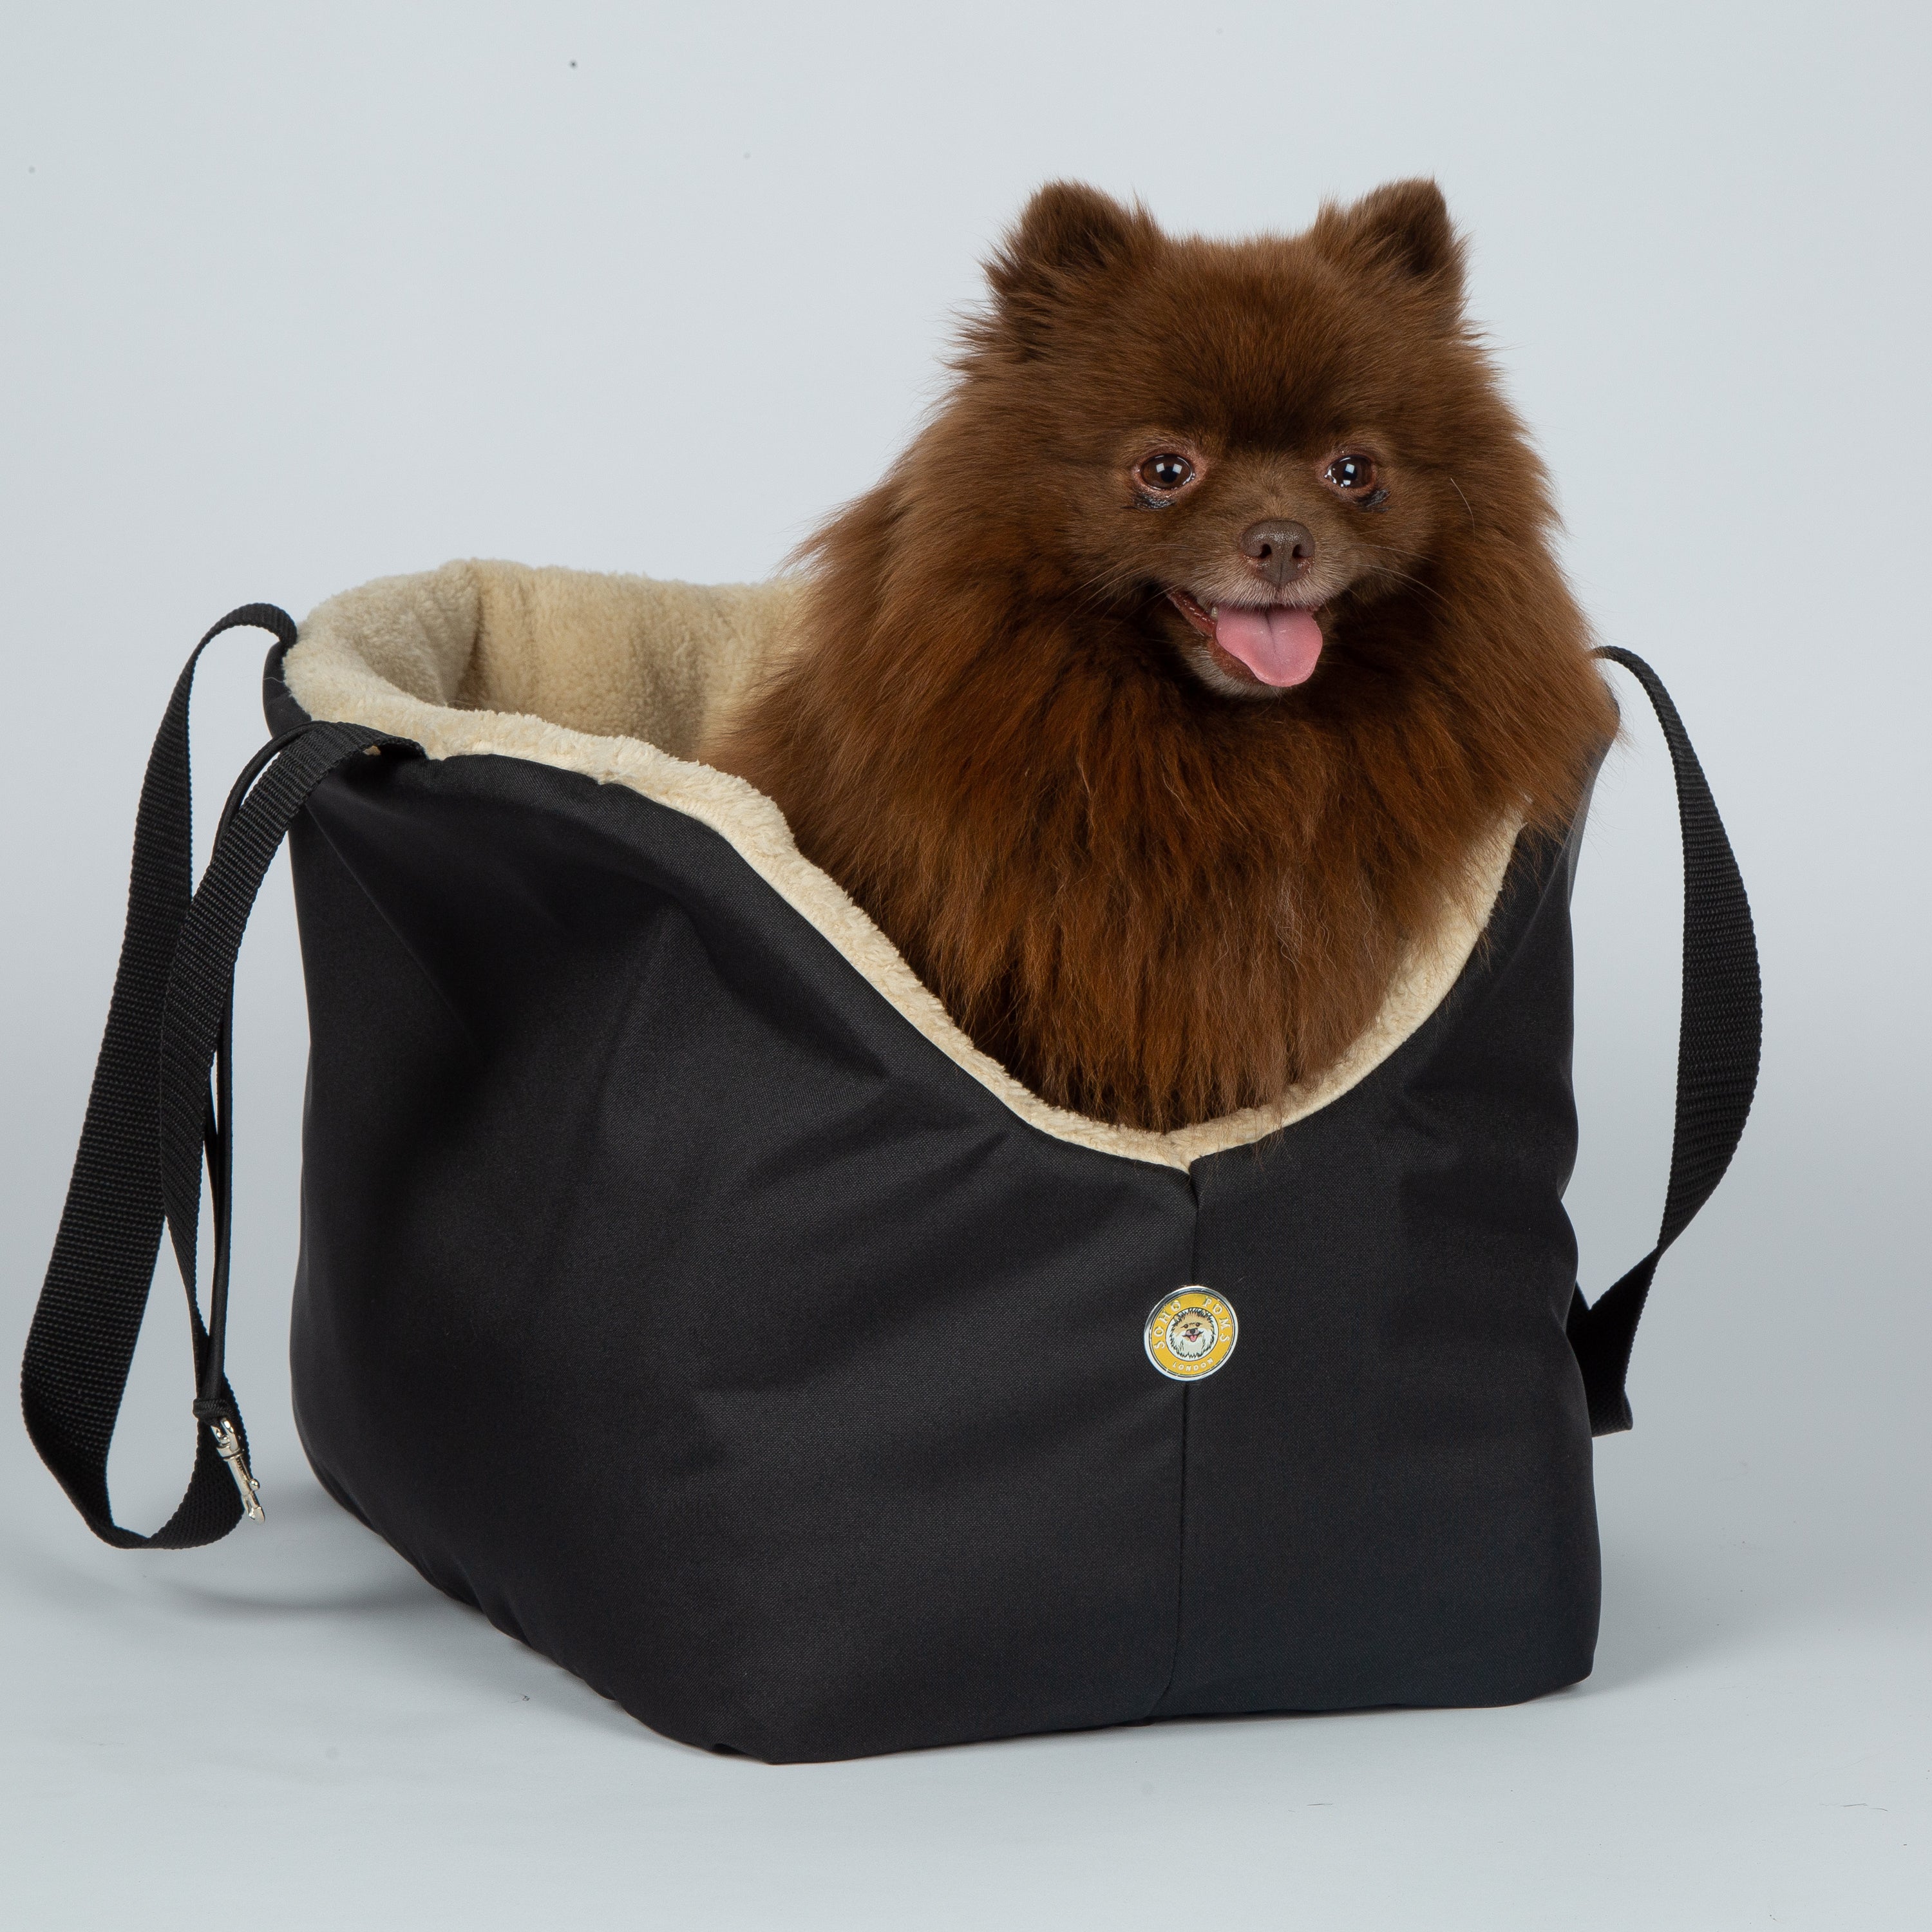 Dog Carrier Bag Rainy Bear Black and Beige by SohoPoms